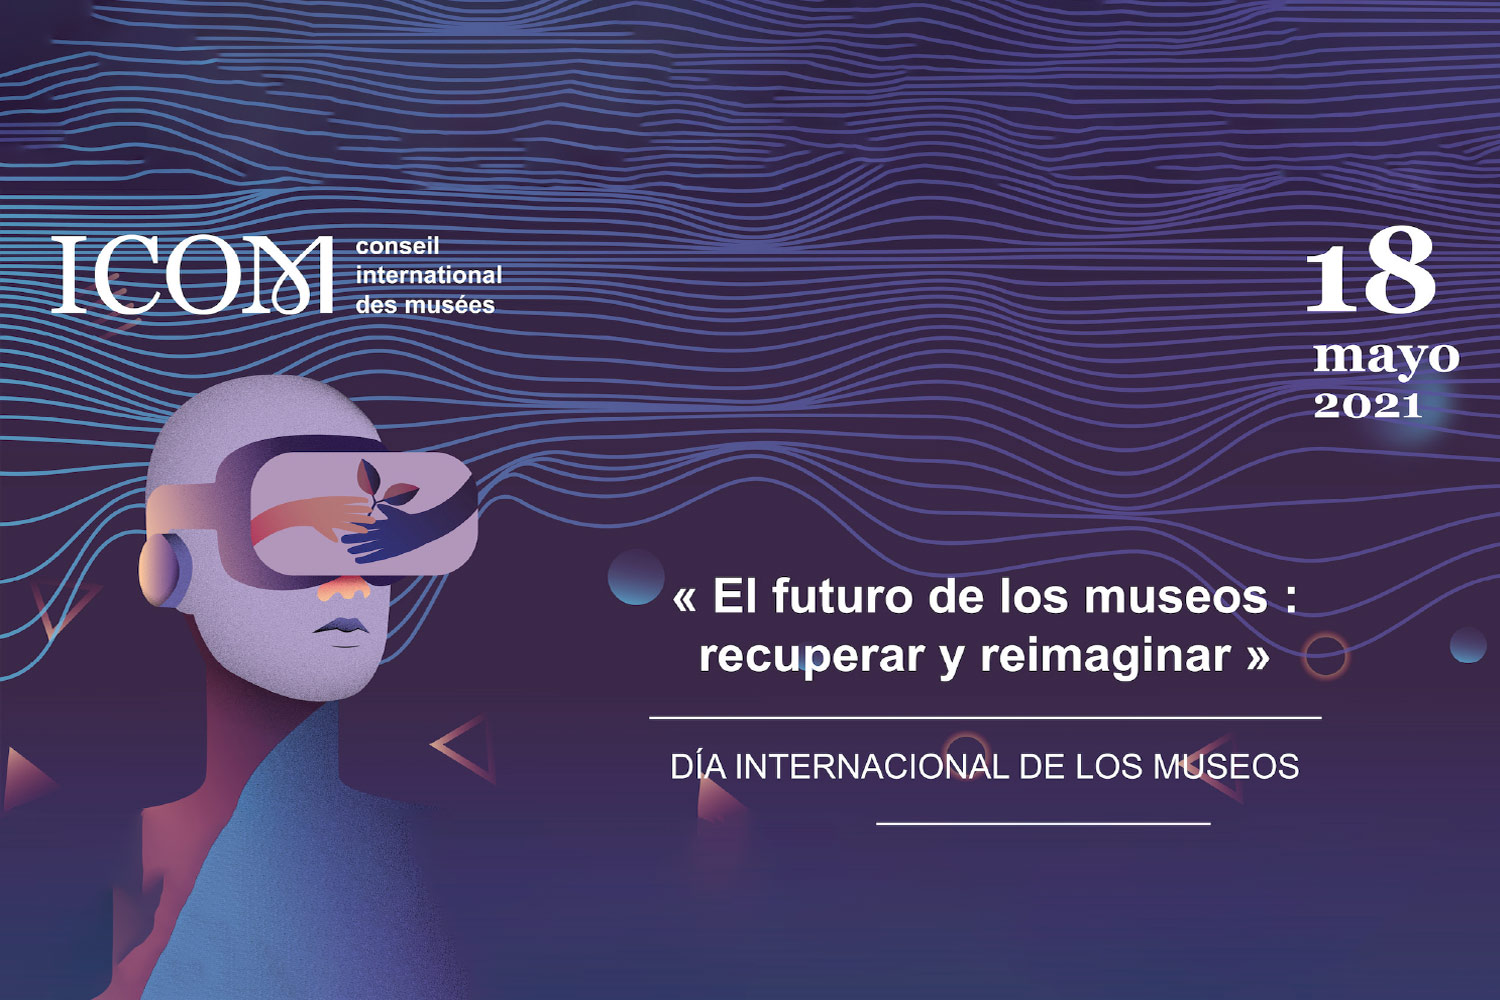 International Museum Day 2021 